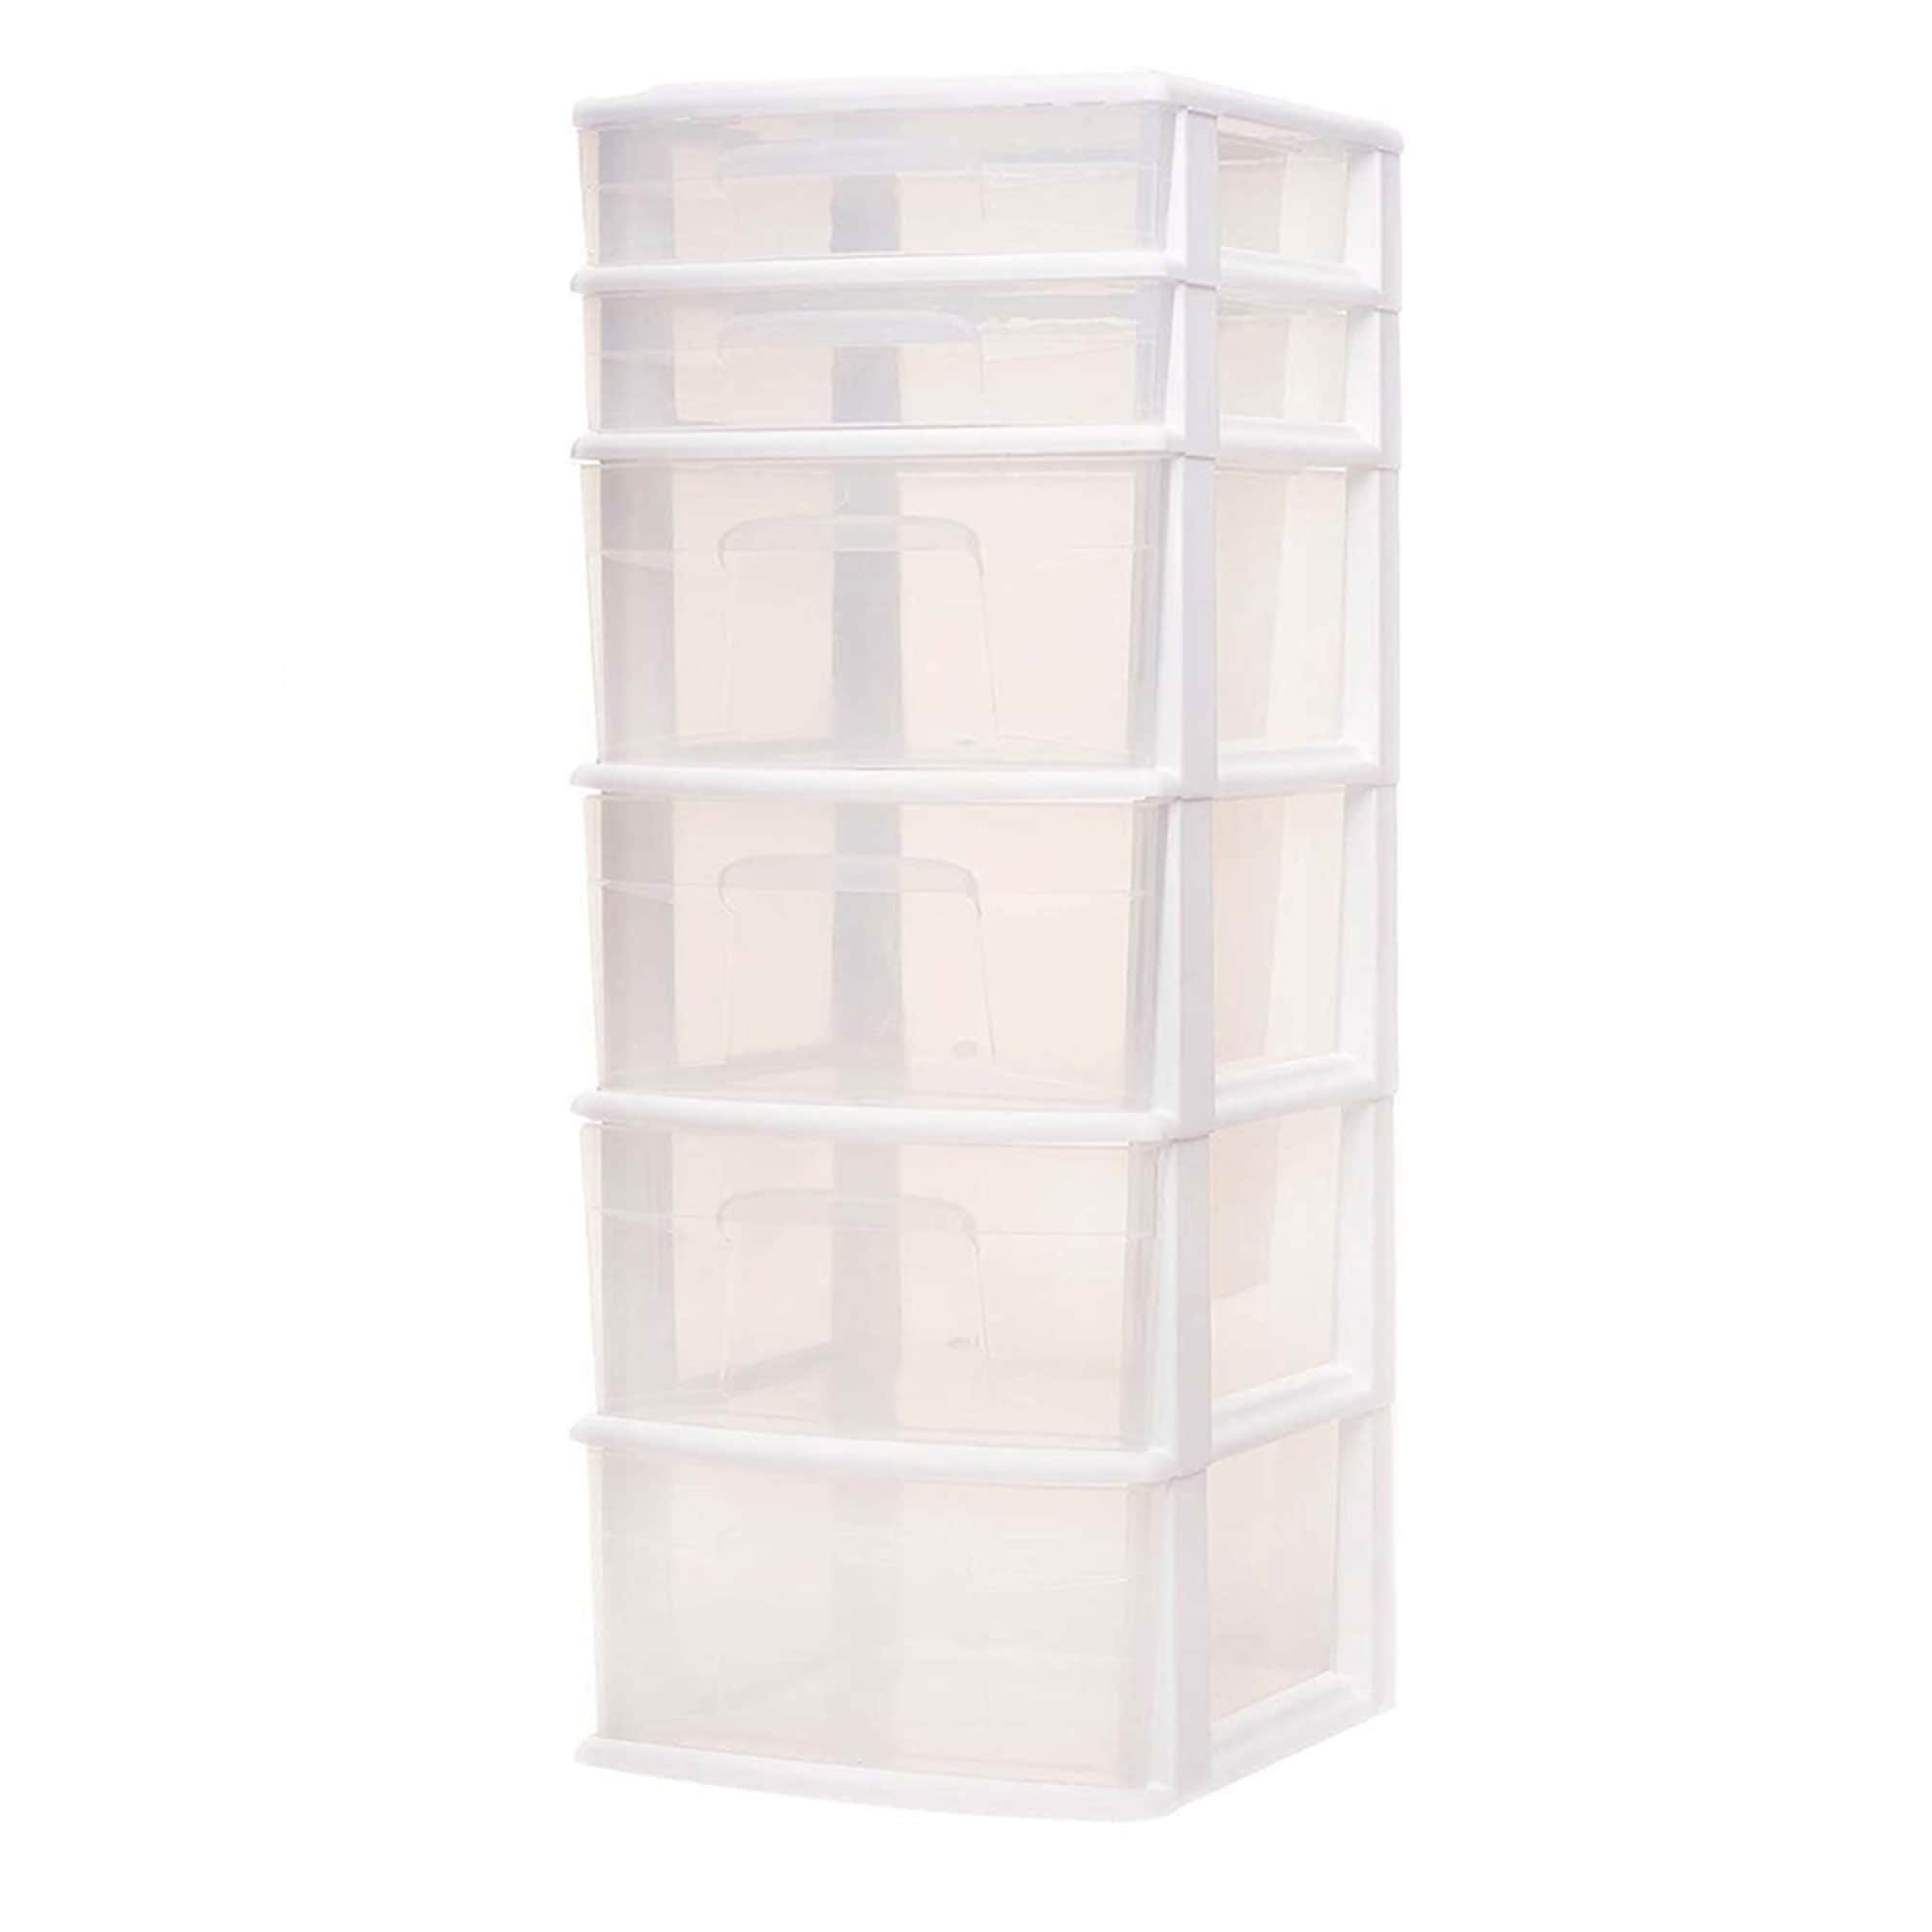 Homz Plastic 6 Clear Drawer Medium Home Organization Storage